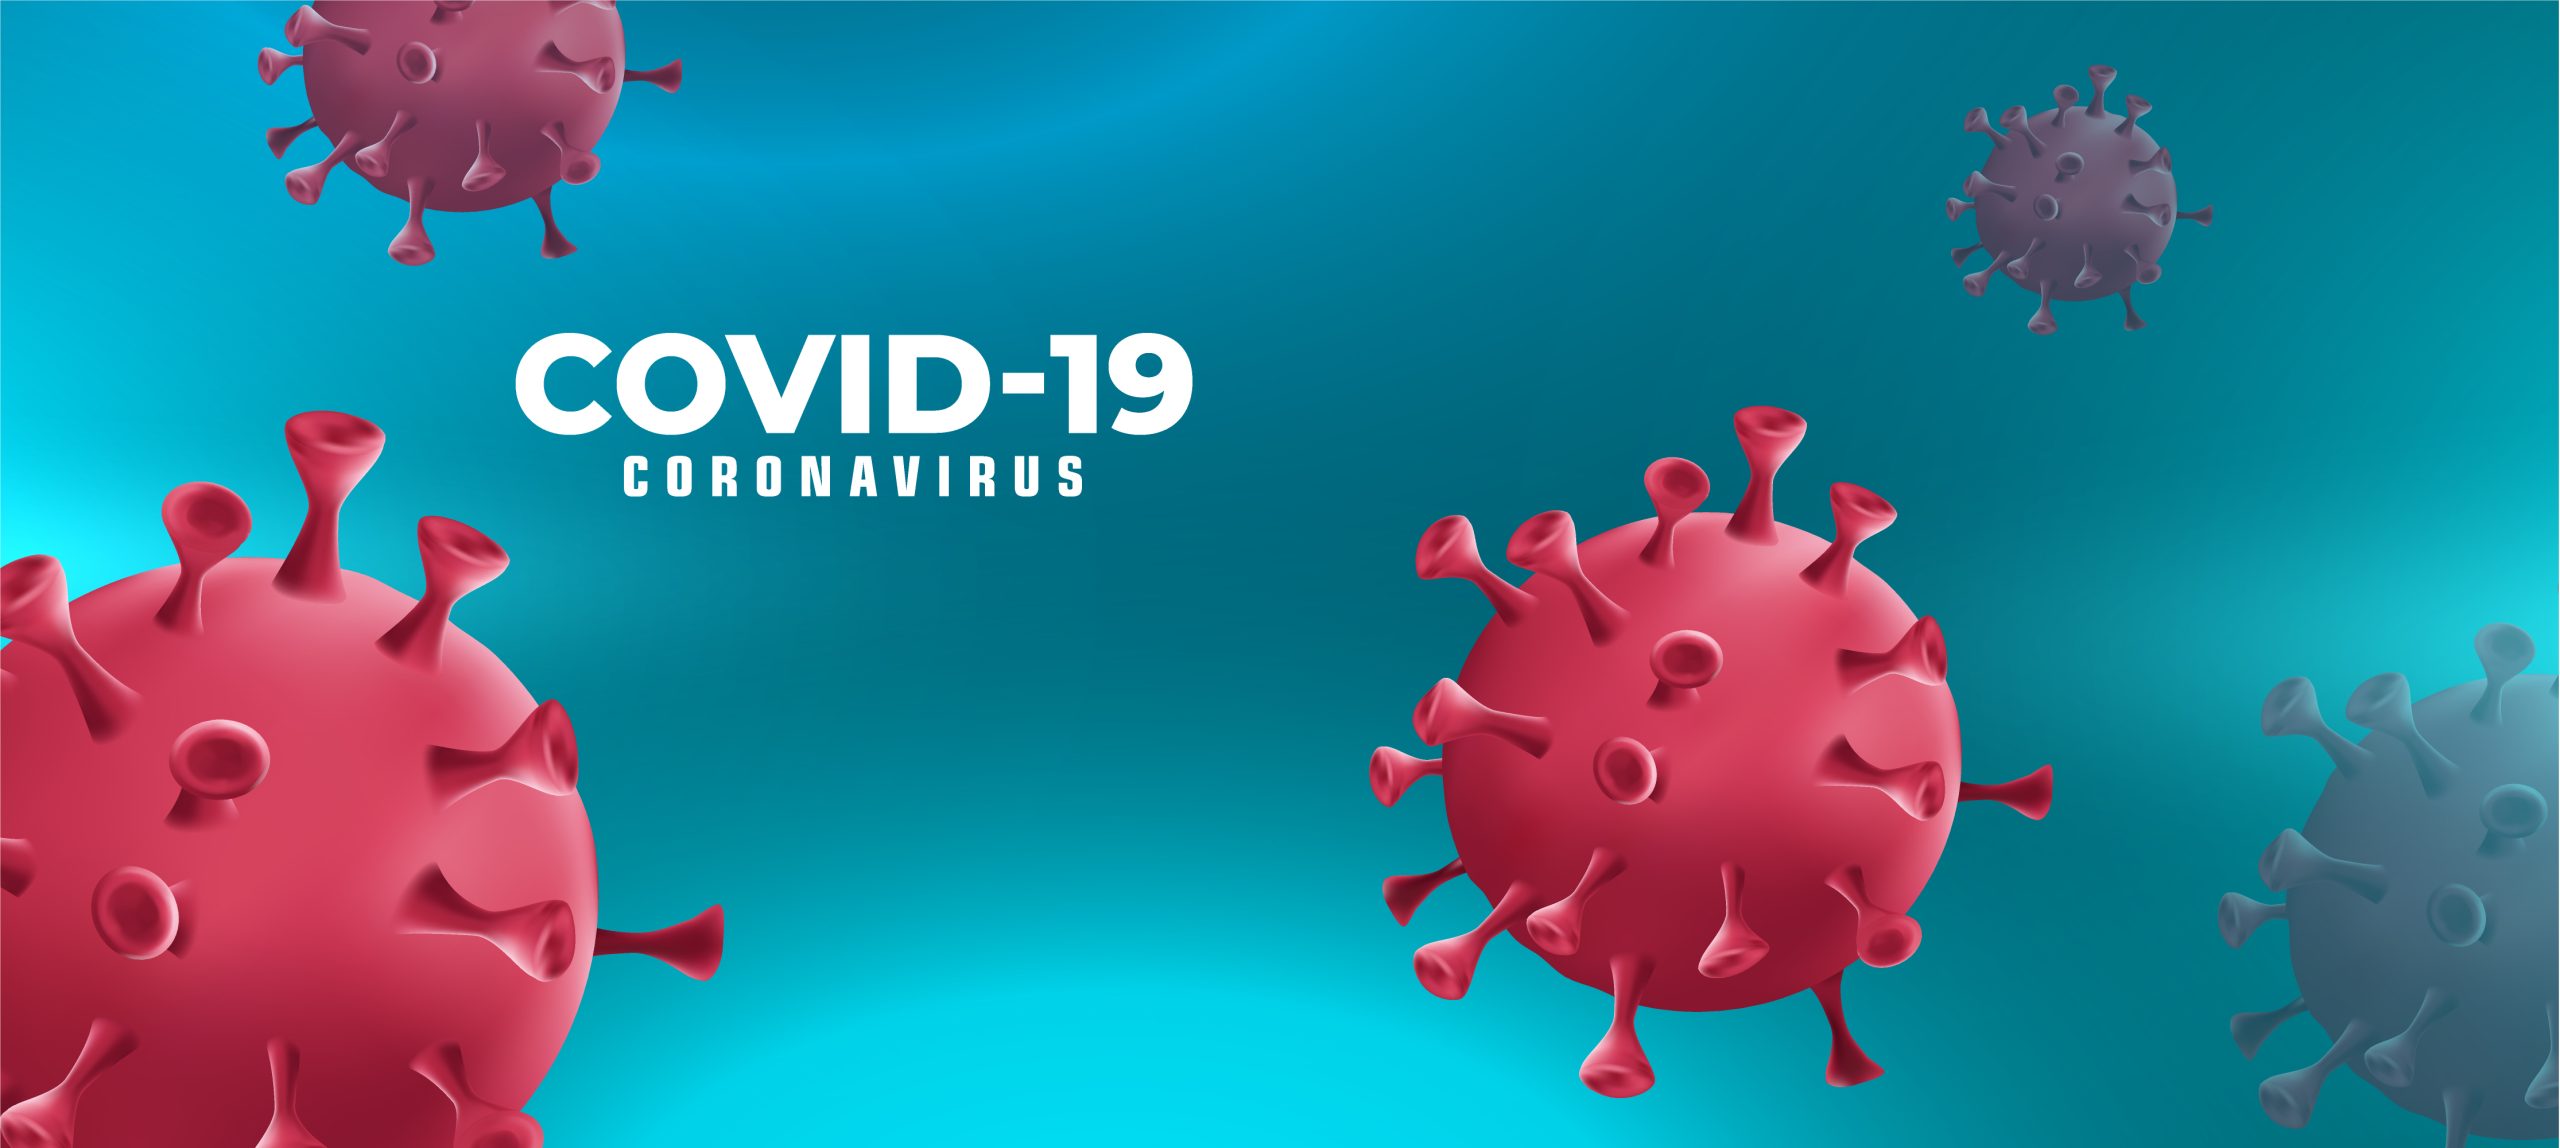 Coronavirus Background Templates - 1